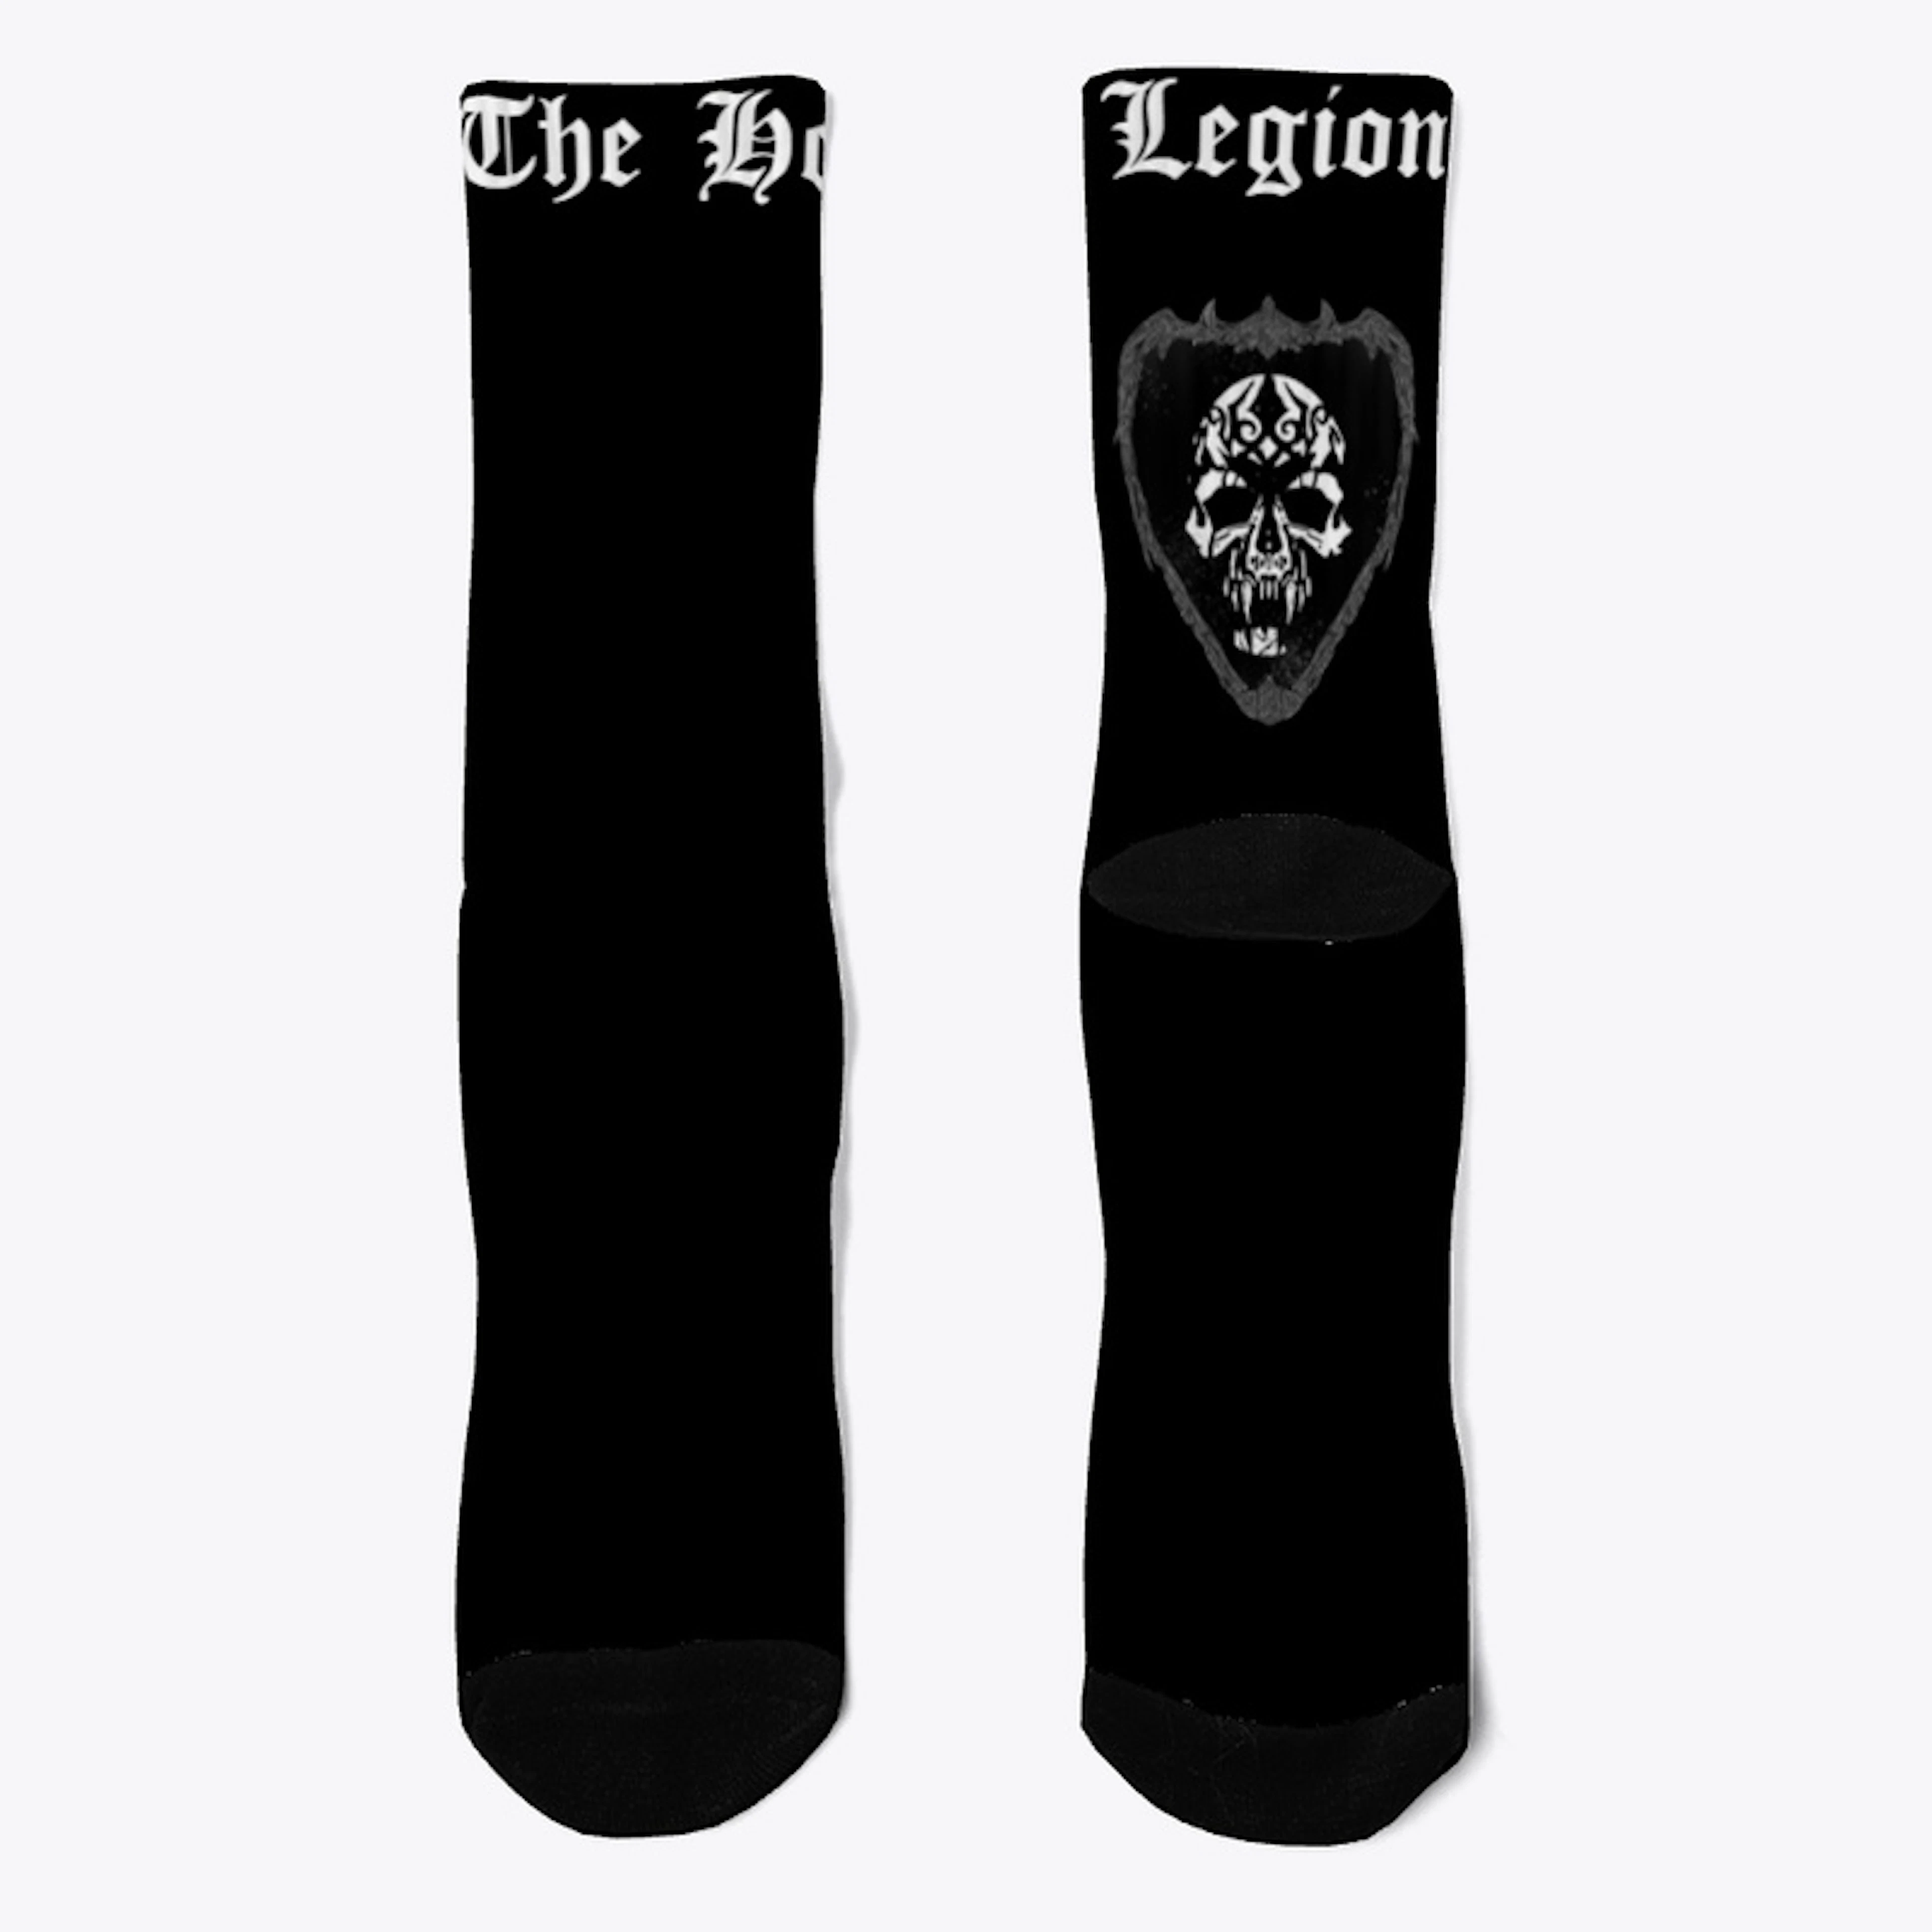 Holy Legion socks